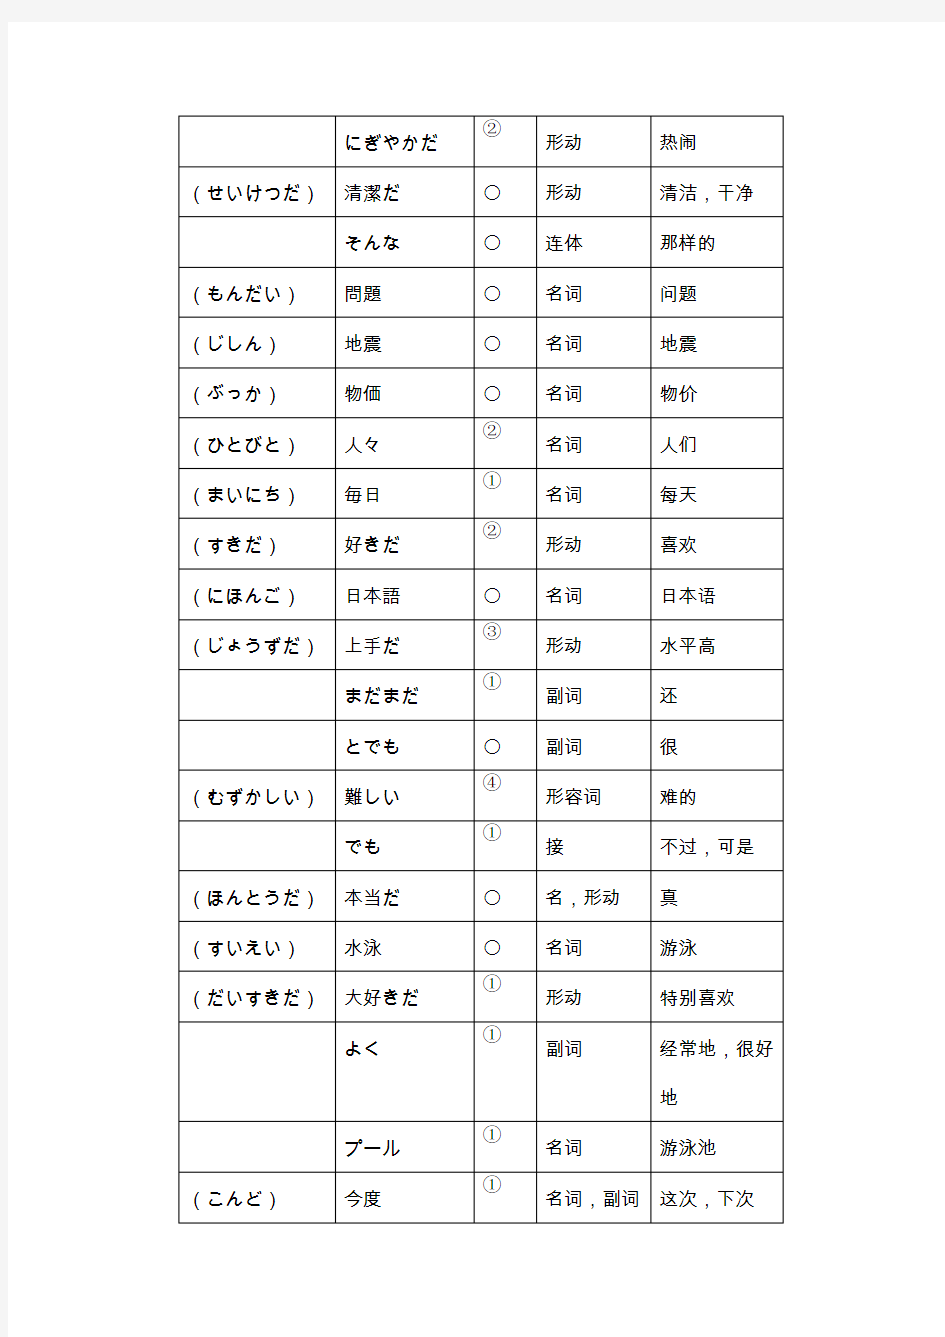 新世纪日本语教程初级 第八课新しい単语